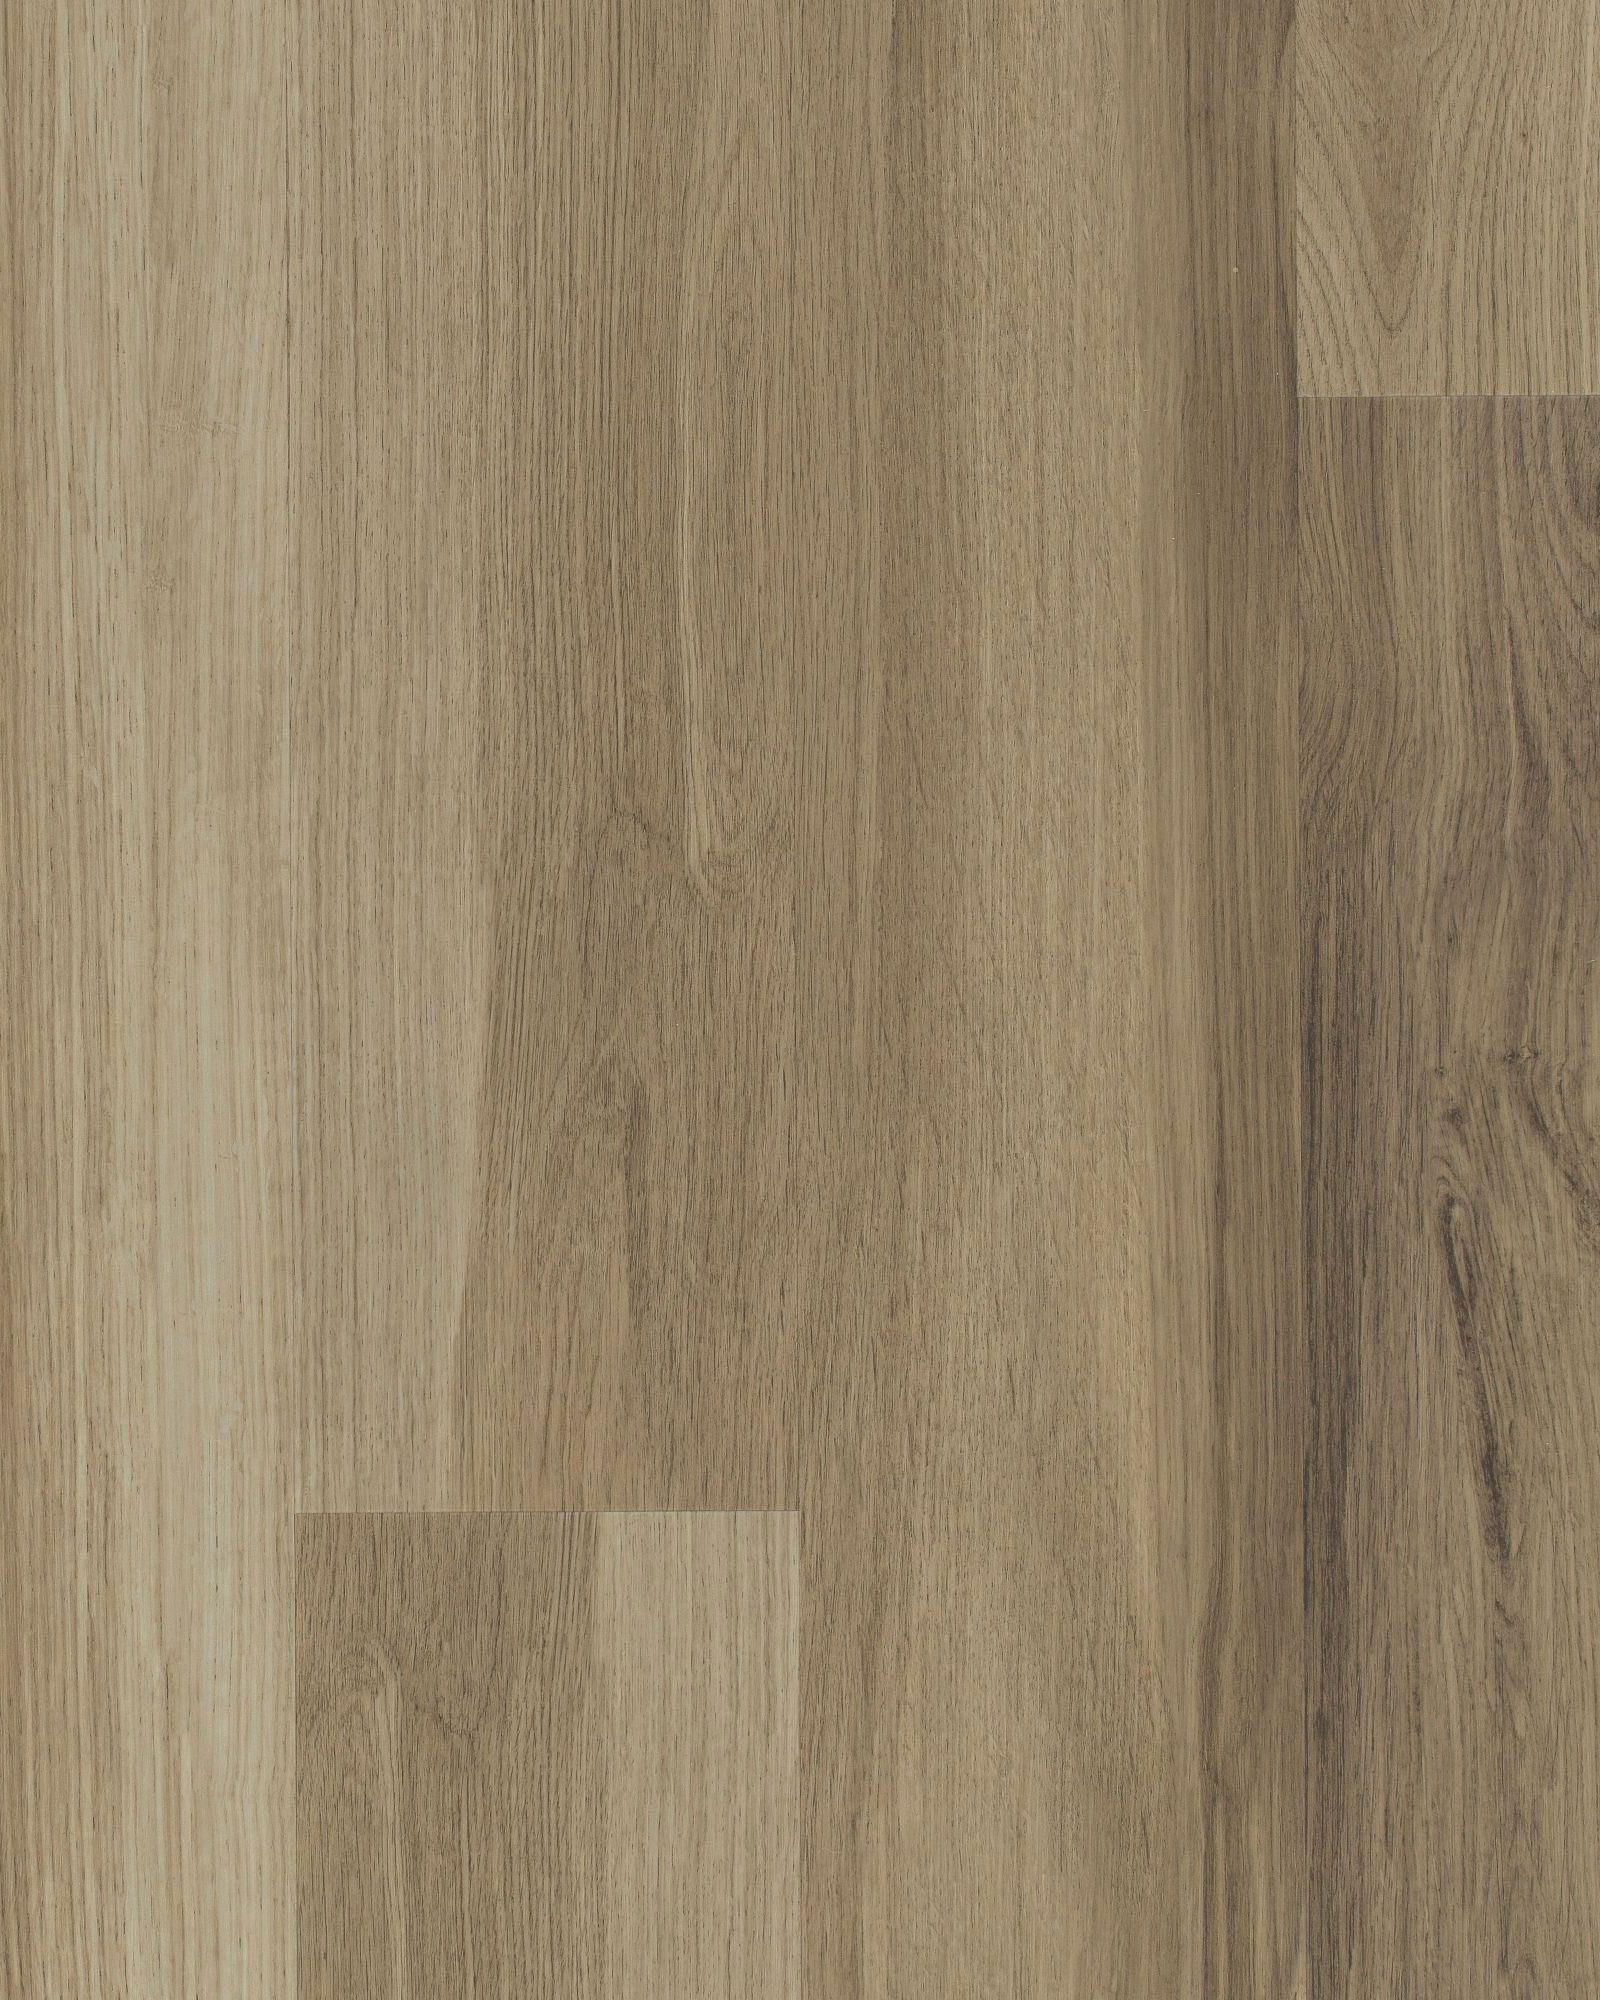 Endura Plus Almond Oak, Almond Oak Laminate Flooring